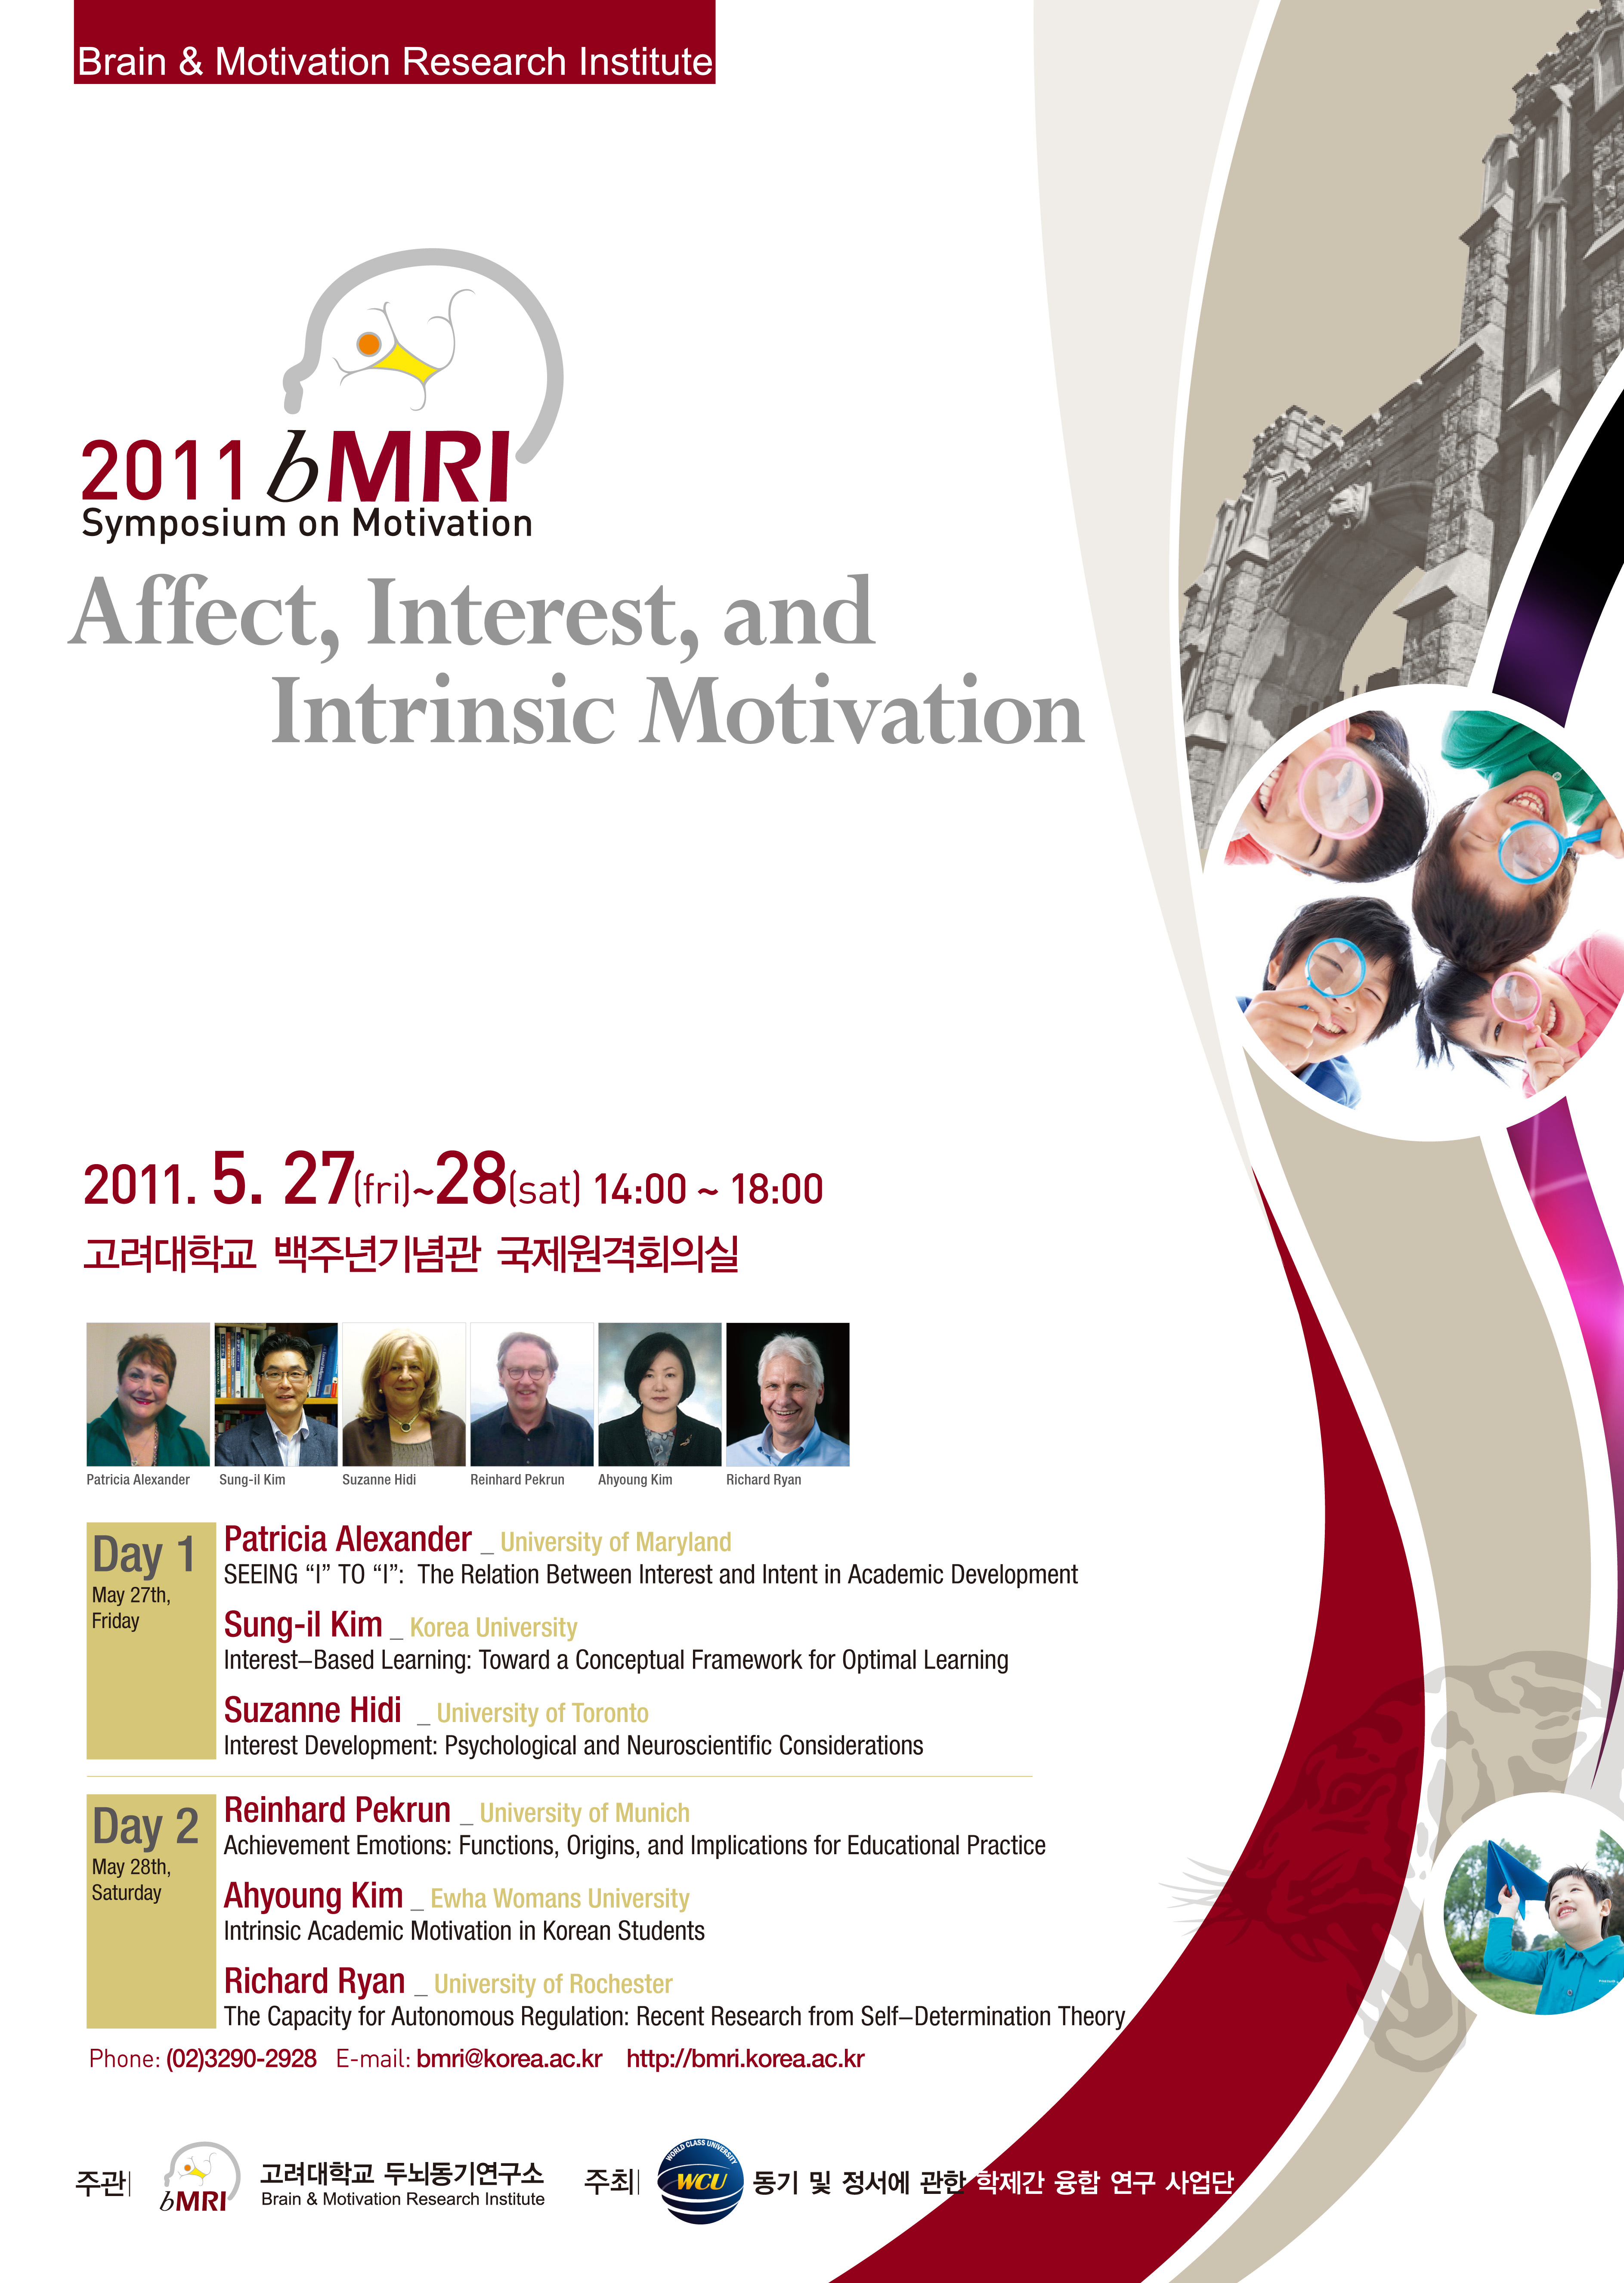 2011 bMRI Symposium on Motivation Day 1 #1